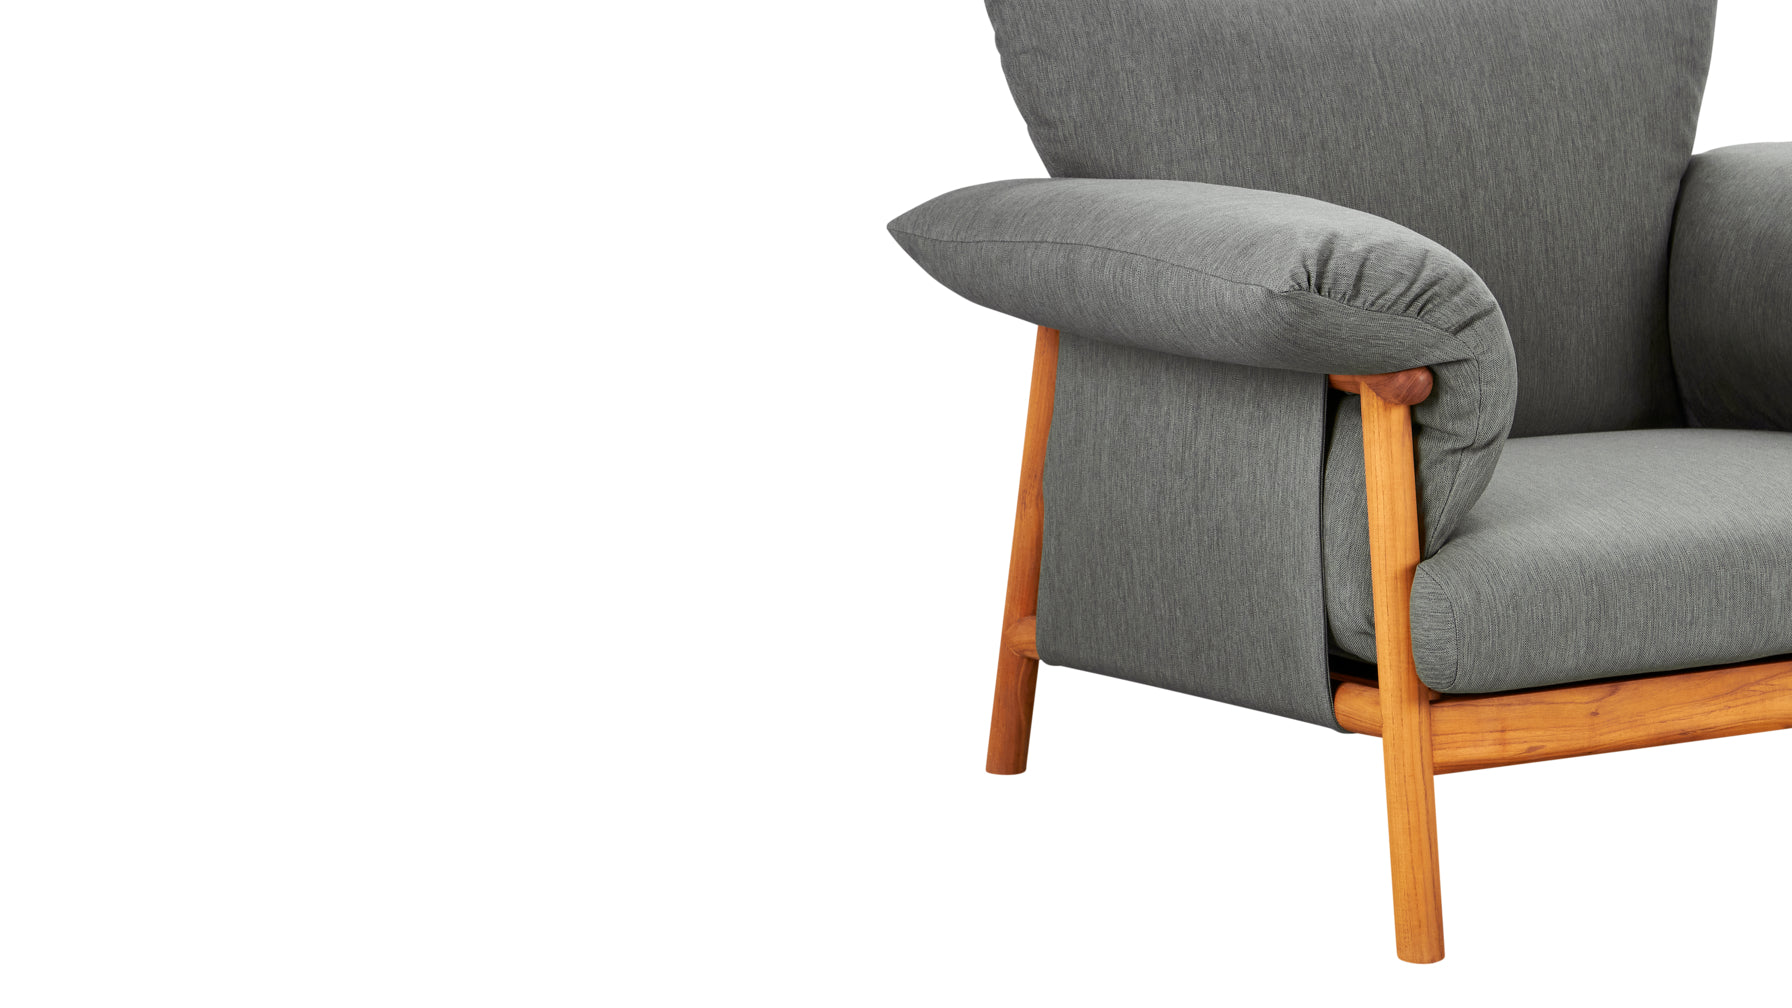 Pillow Talk Outdoor Lounge Chair, Pepper - Image 6